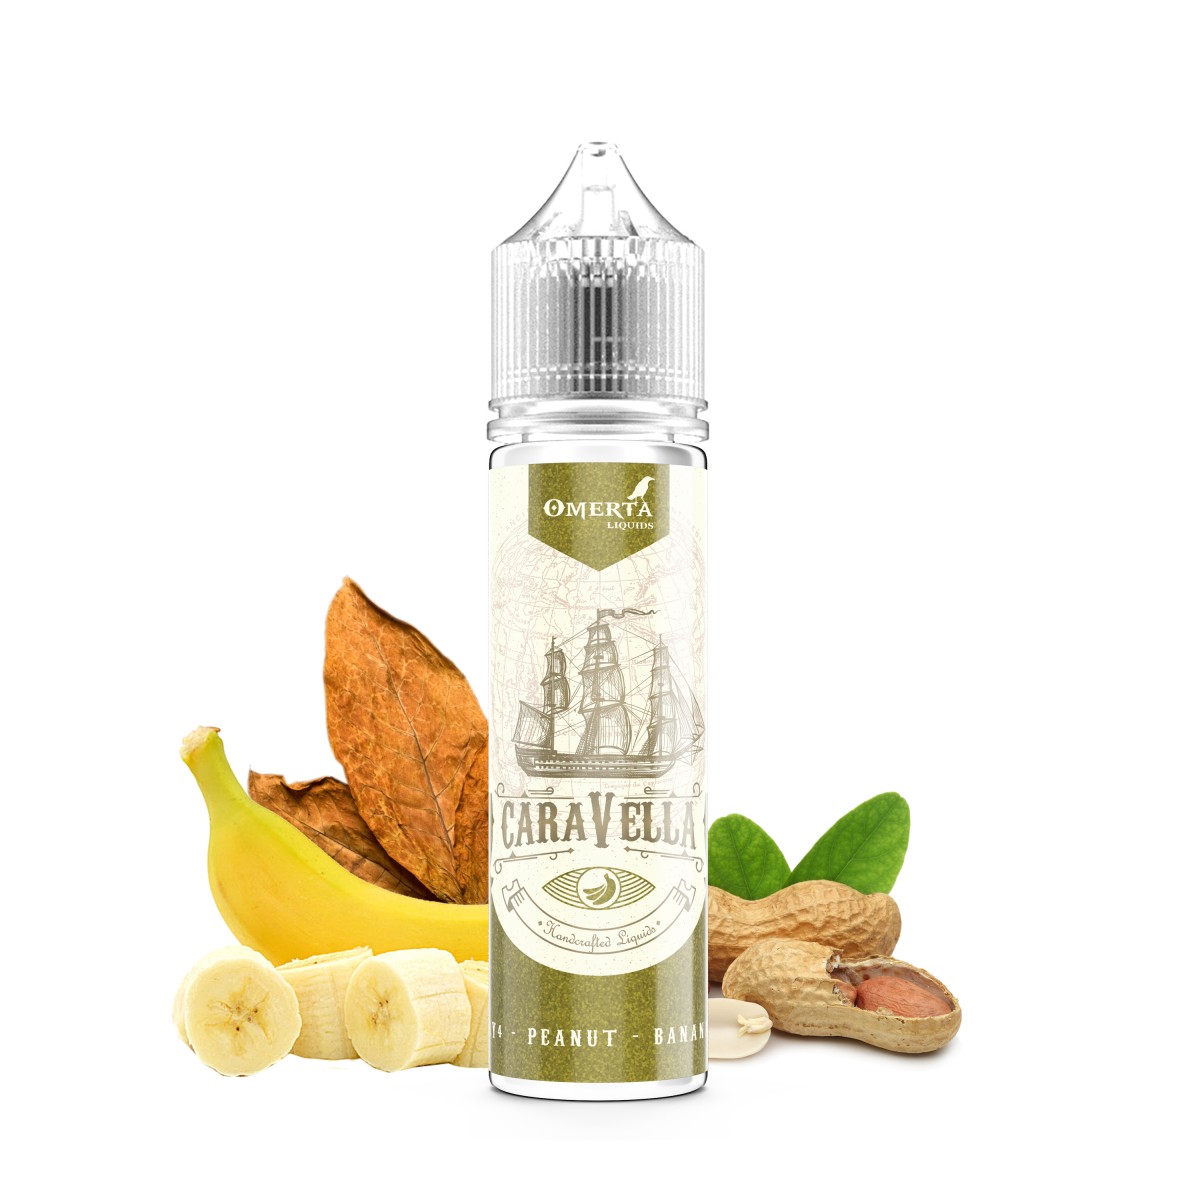 Caravella RY4 Peanut Banana 20ml Flavor WBF 1200x1200 1 - Caravella RY4 Peanut Banana 60